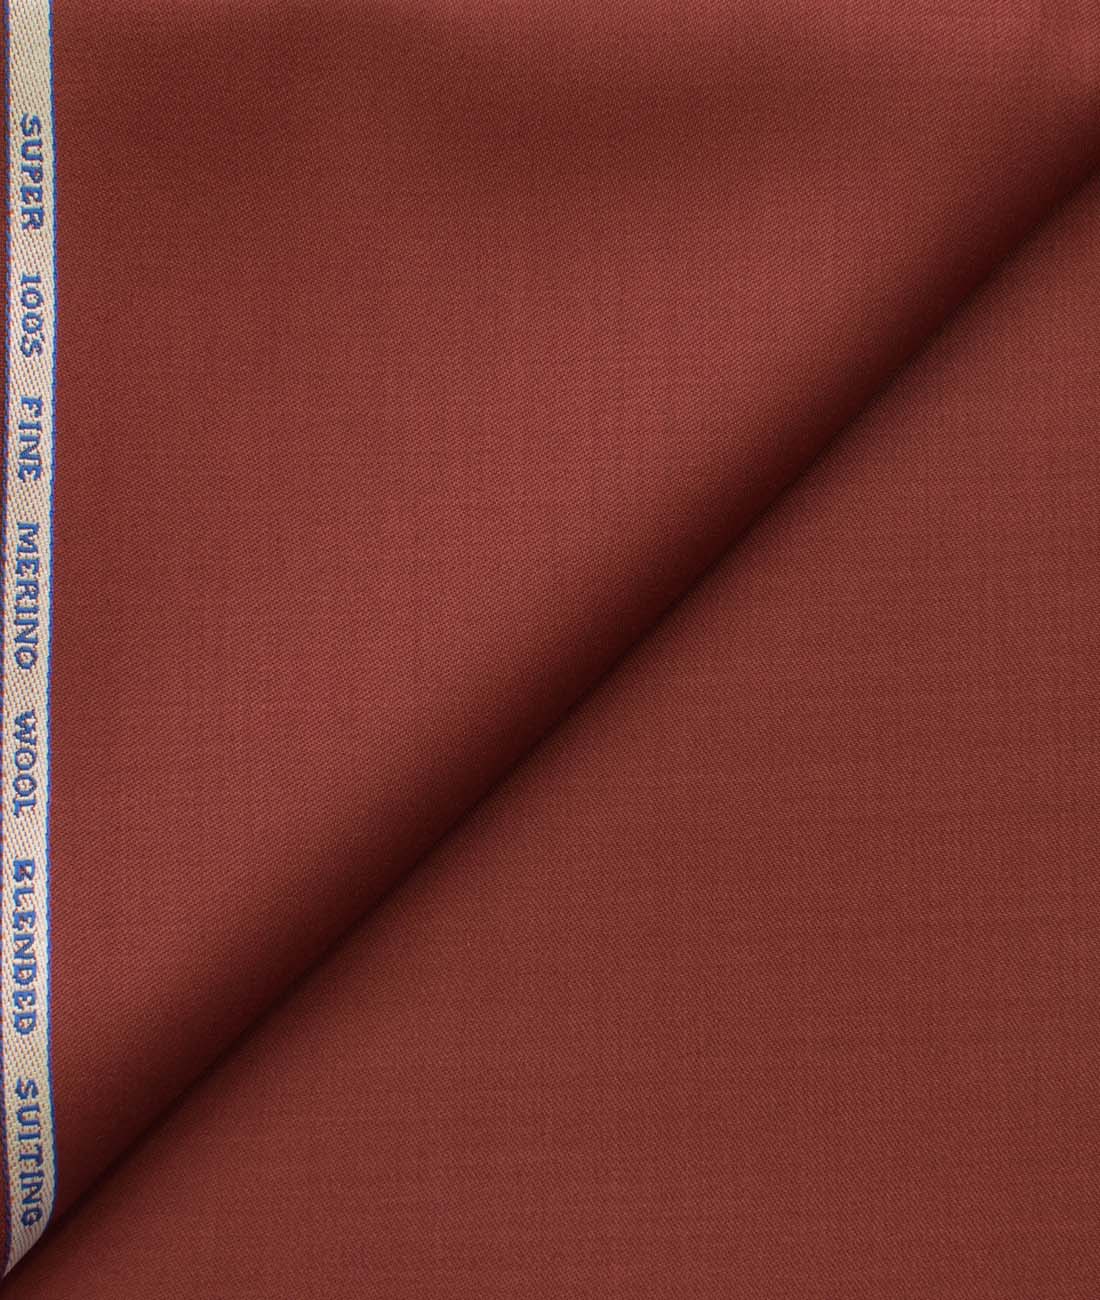 Premium Australian Merino Wool Blended Colour Plain Pants Fabric Light